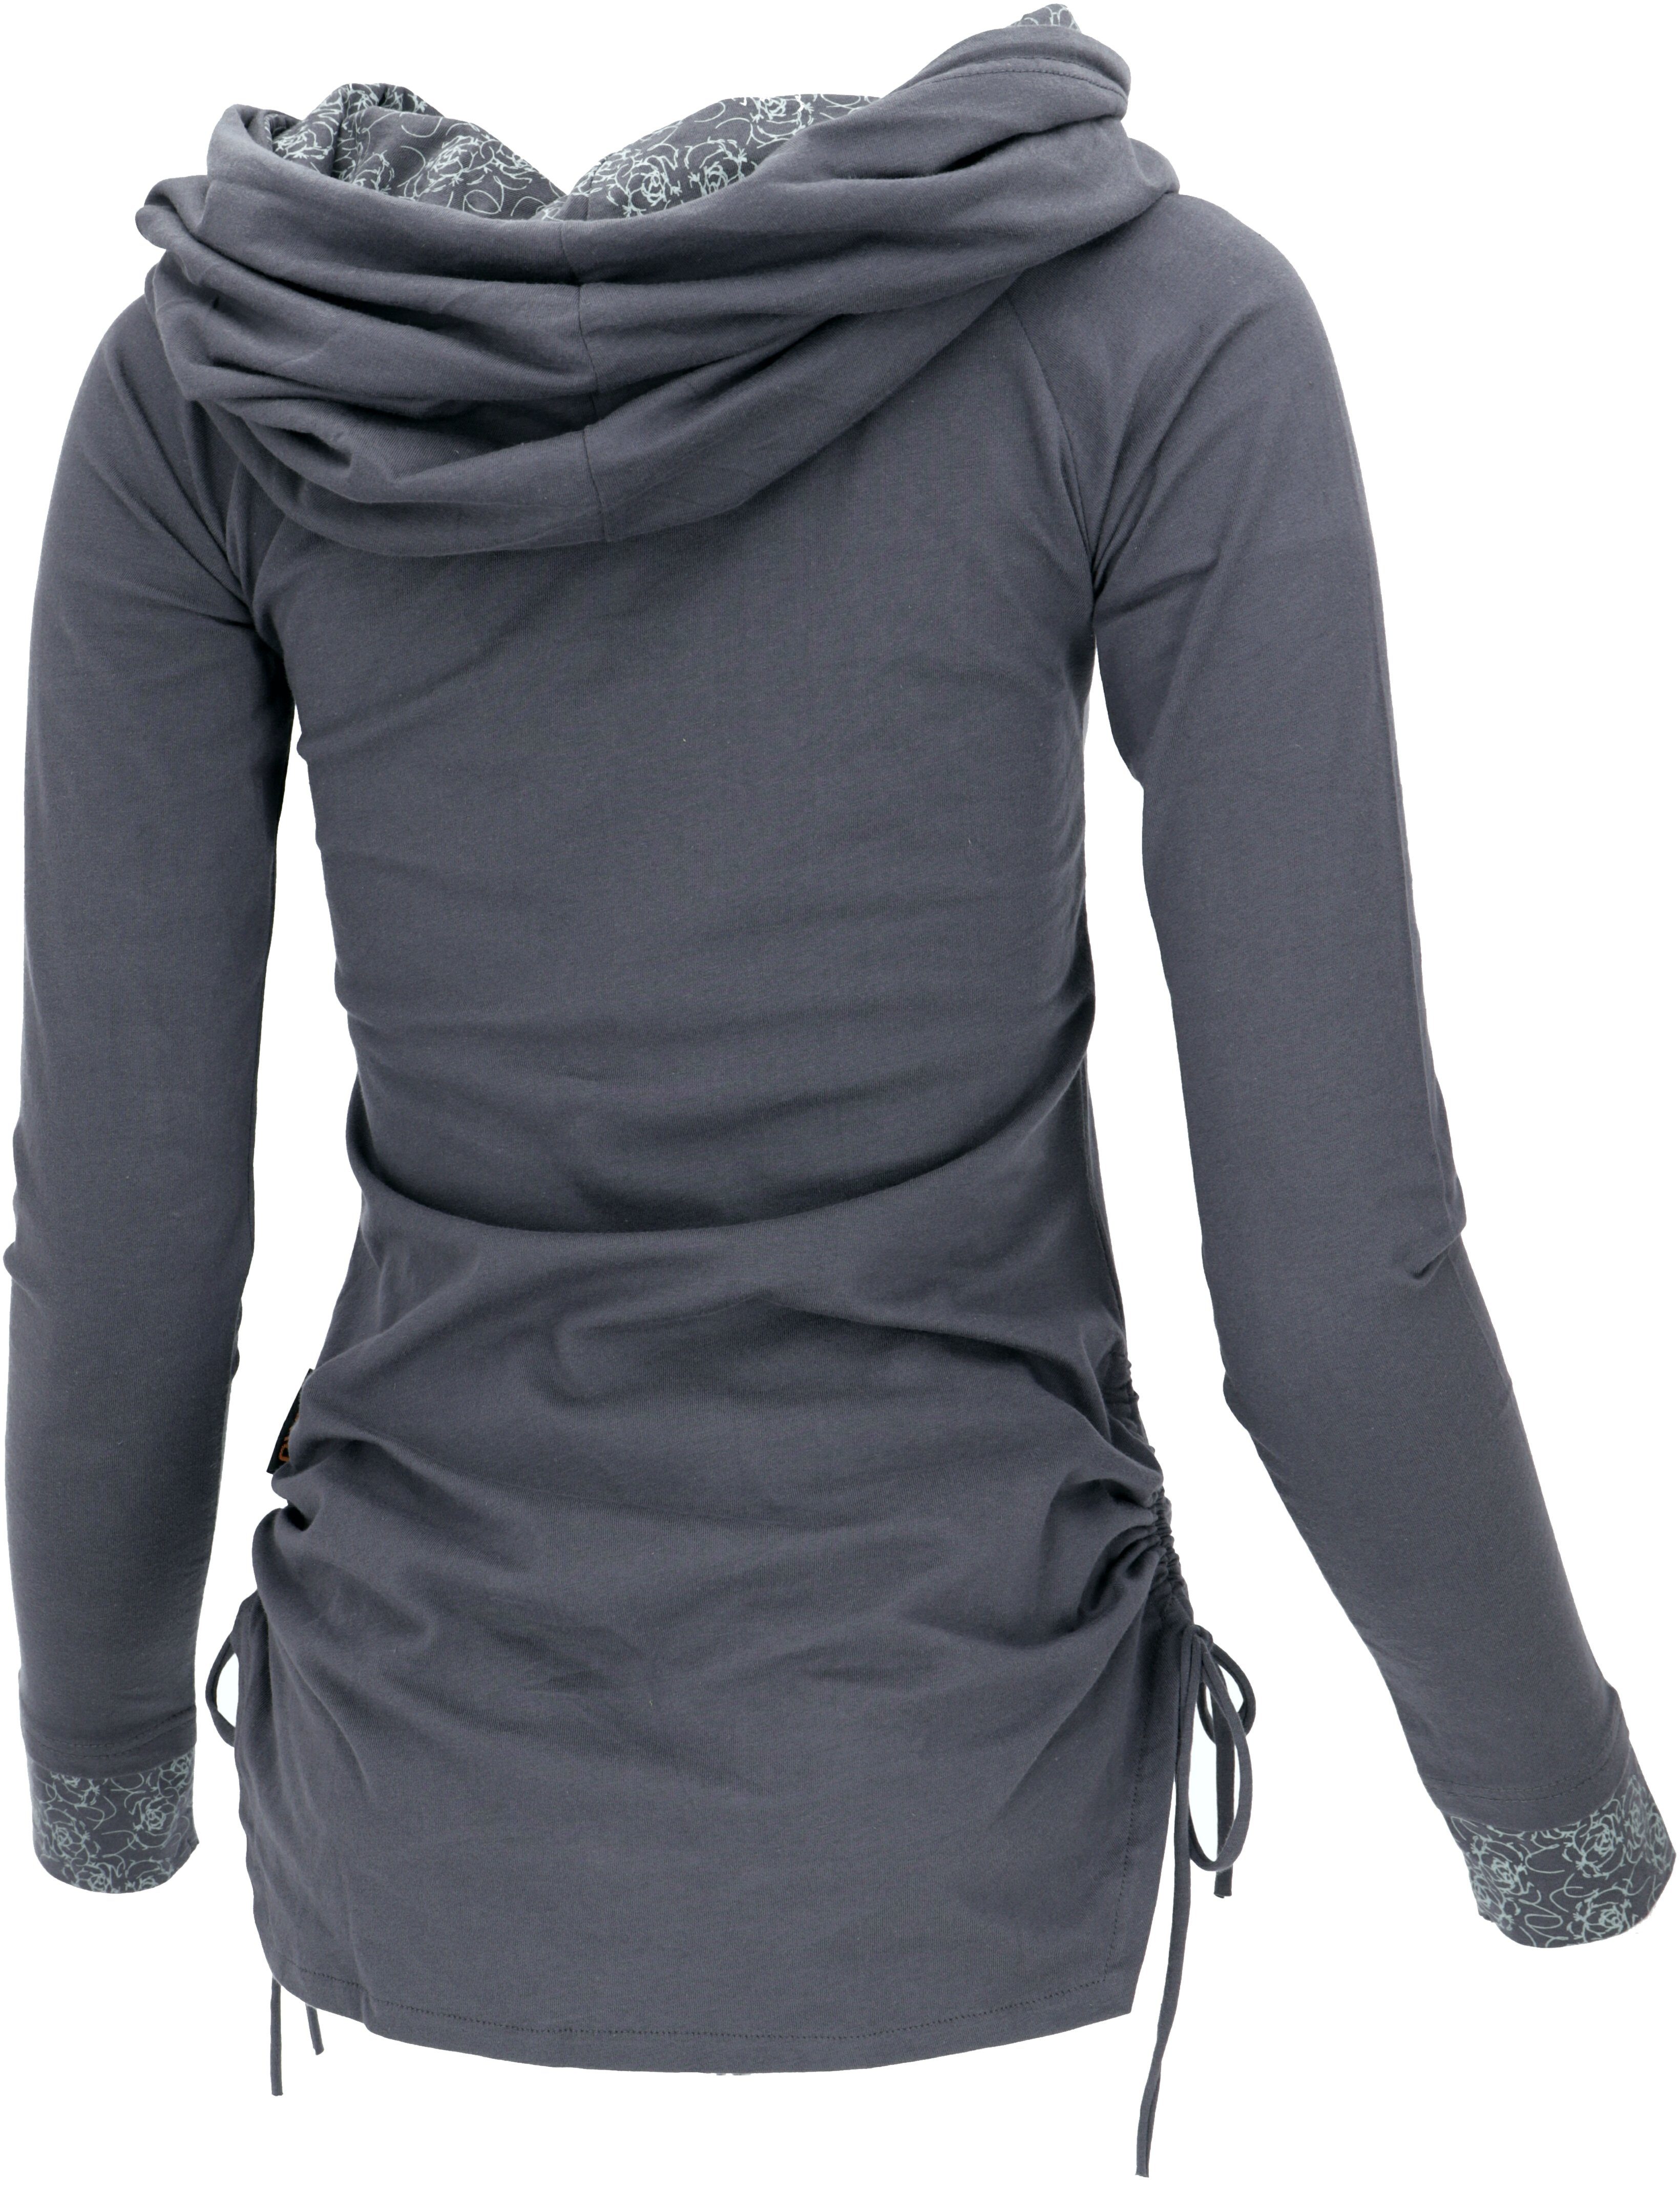 Guru-Shop Longsleeve blaugrau alternative Boho aus Bekleidung Shirt.. Bio-Baumwolle, Longshirt